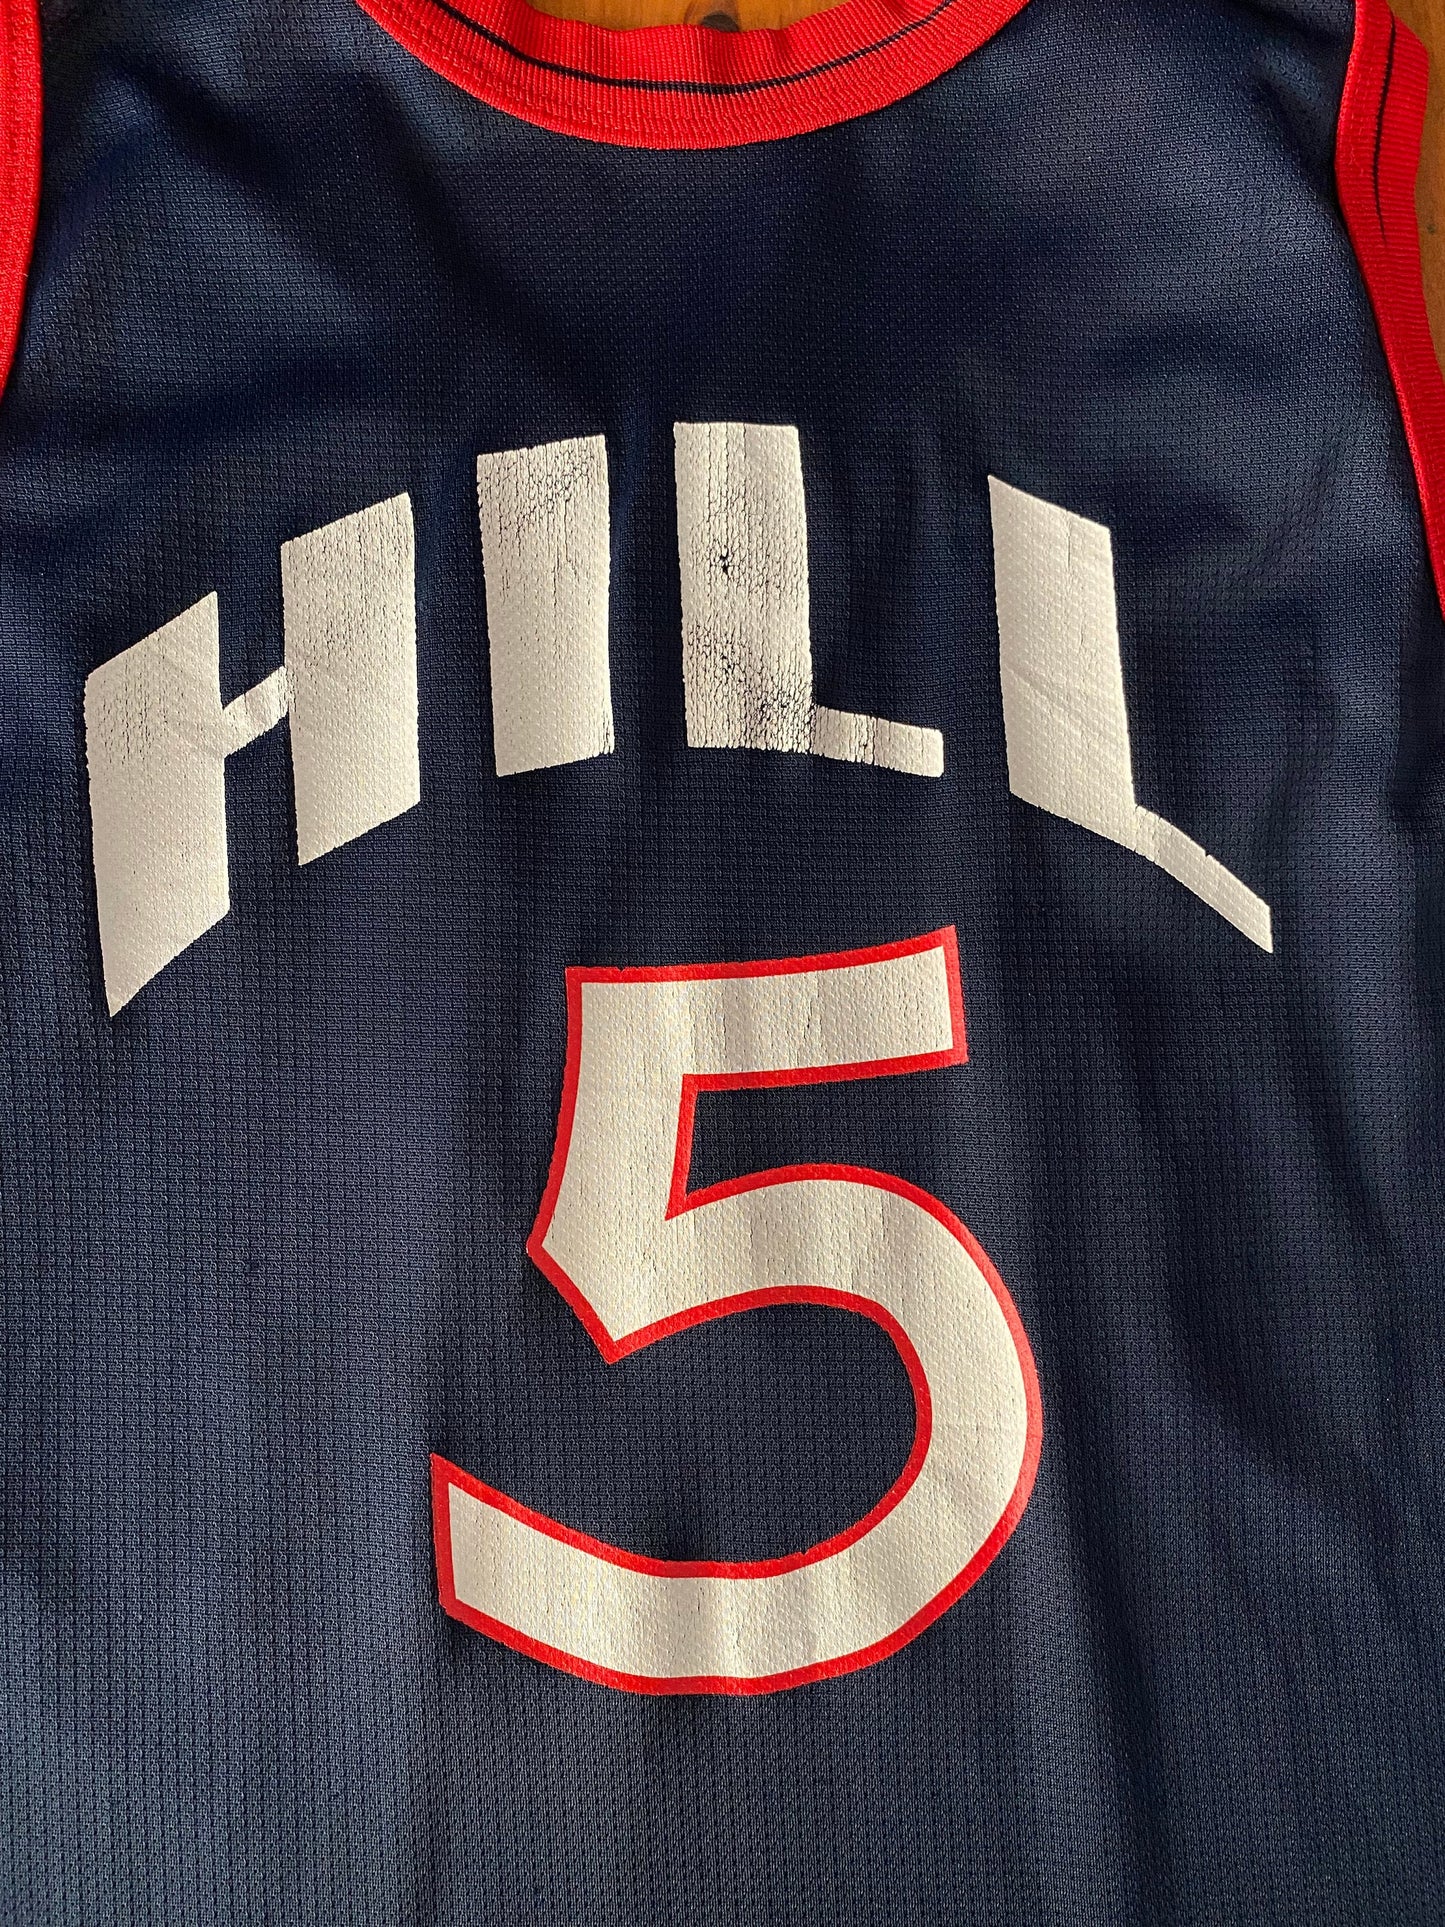 Size 48 VTG 90s USA team Champion NBA jersey, Player Hill #05